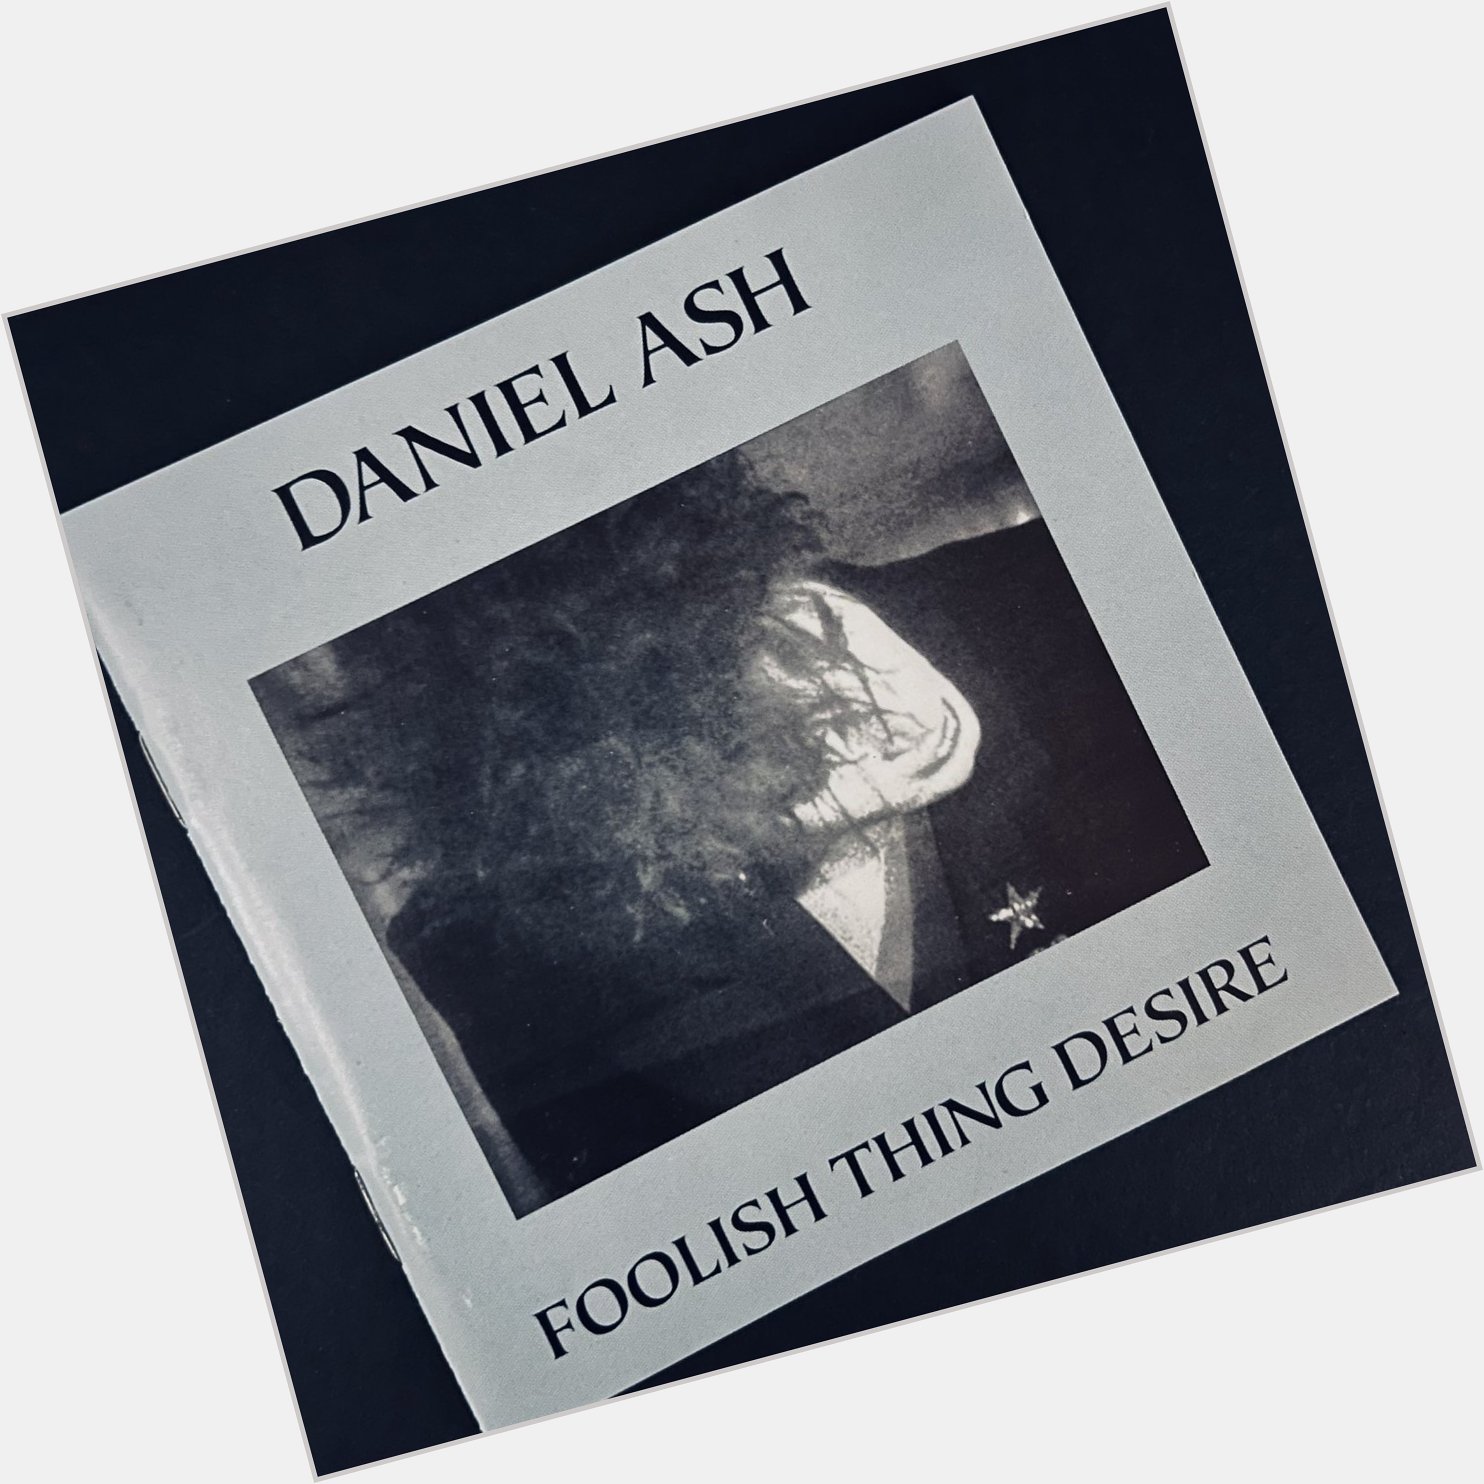 Daniel Ash        (  7/31)
Happy Birthday   